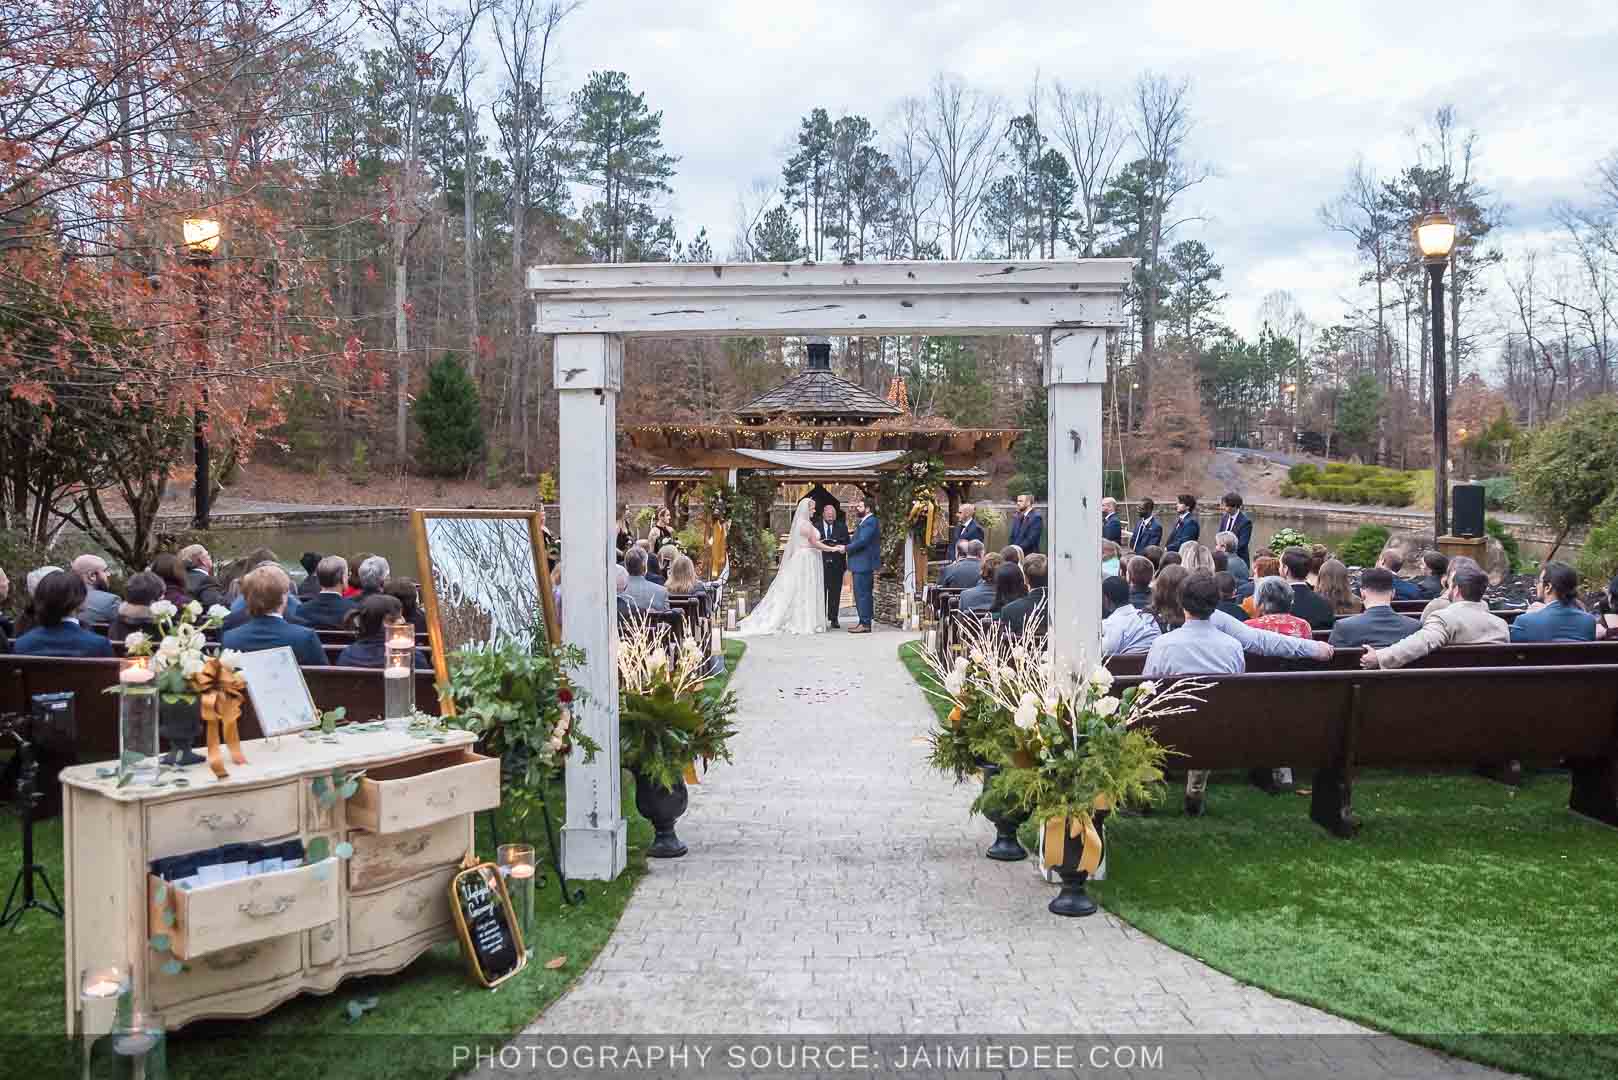 Rocky's Lake Estate Wedding Venue - Wedding ceremony - full view of ceremony site